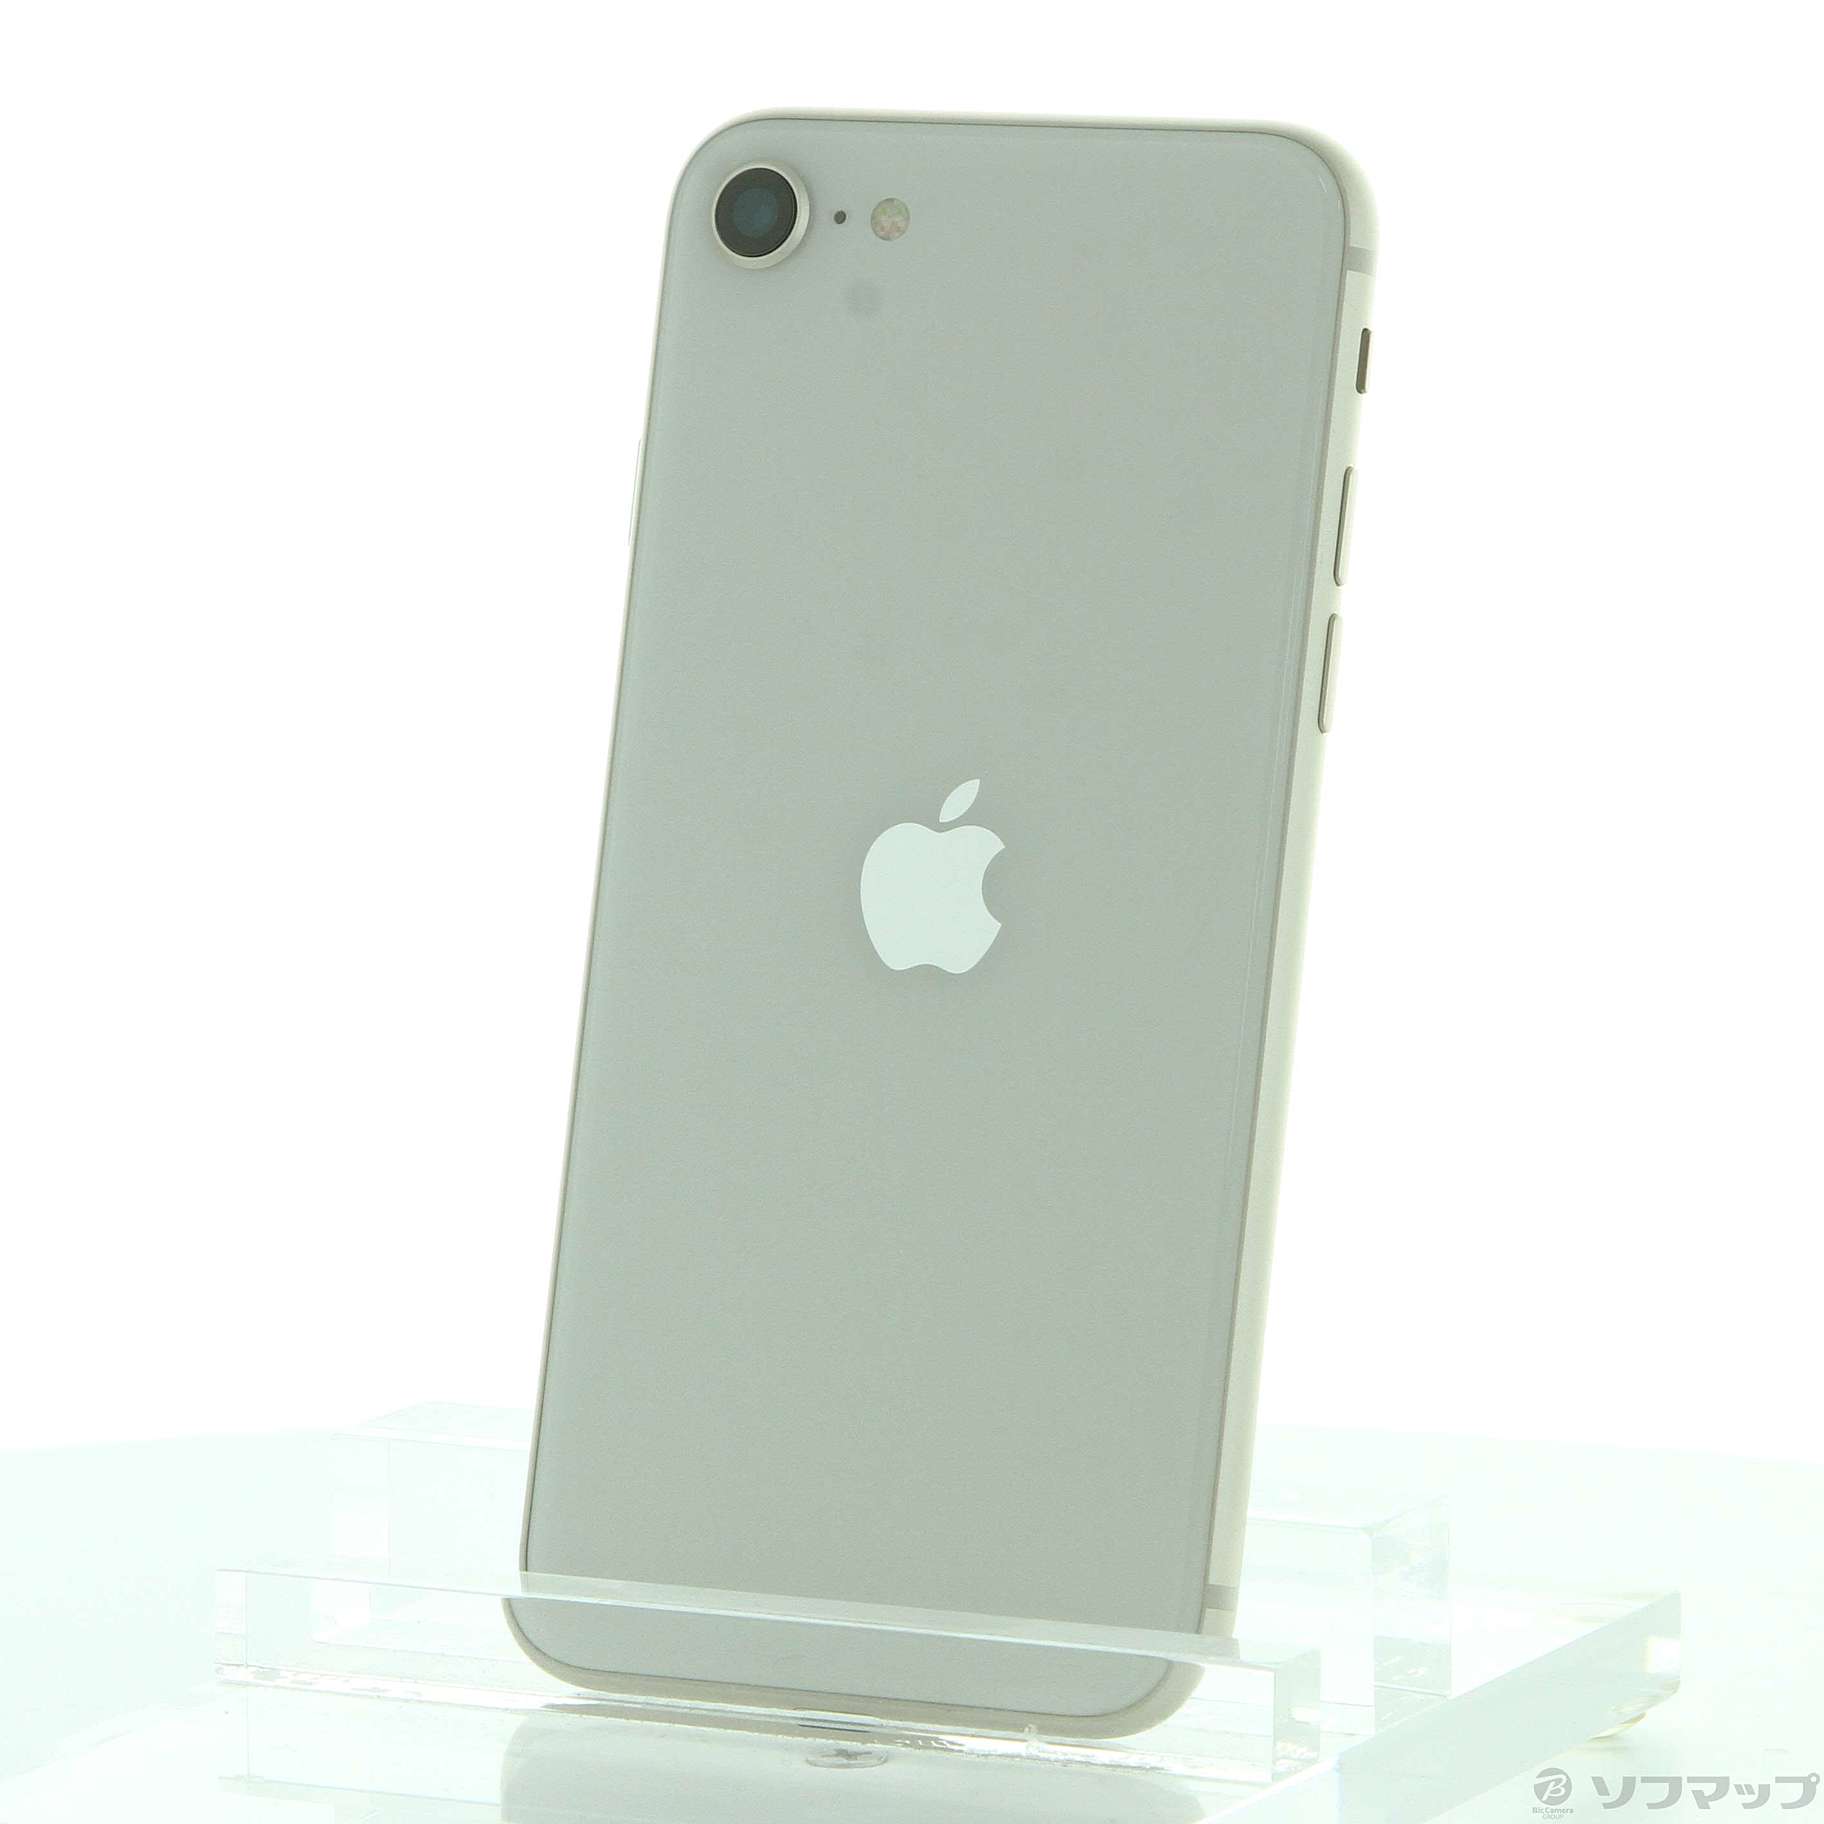 iPhone SE (第3世代) Starlight 128GB SIMフリー - スマートフォン本体